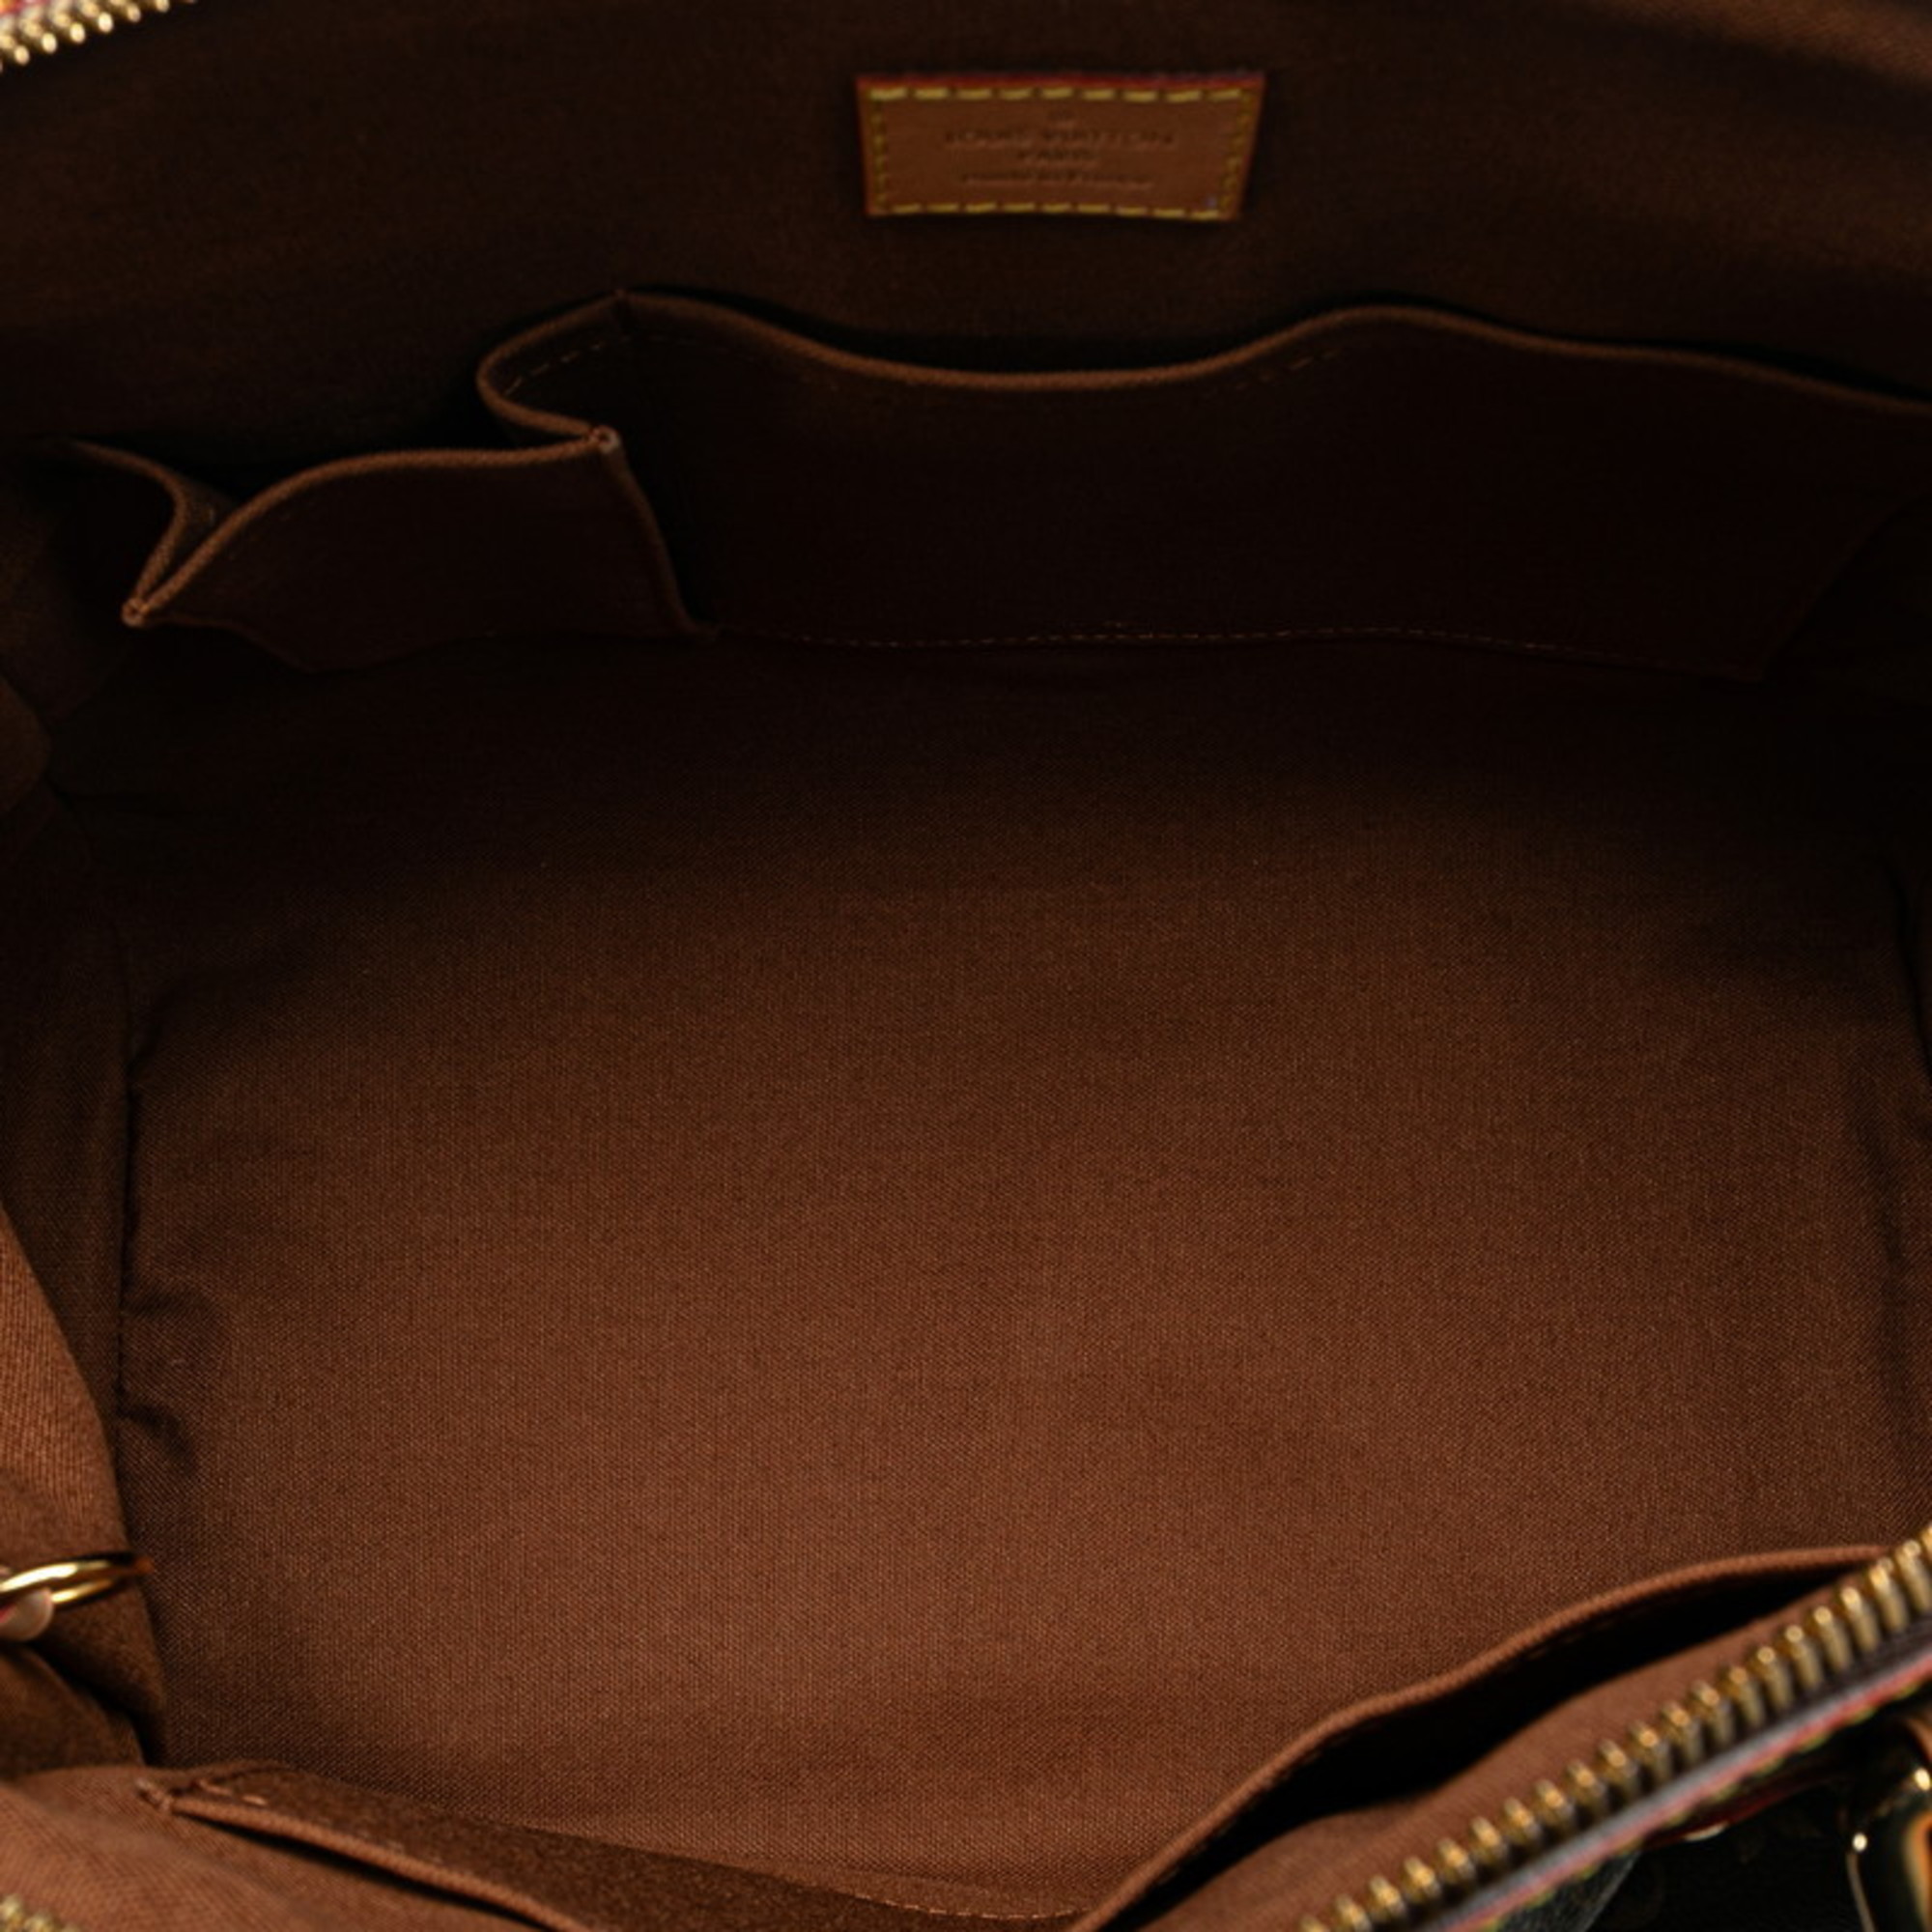 Louis Vuitton Monogram Tivoli GM Handbag Shoulder Bag M40144 Brown PVC Leather Women's LOUIS VUITTON